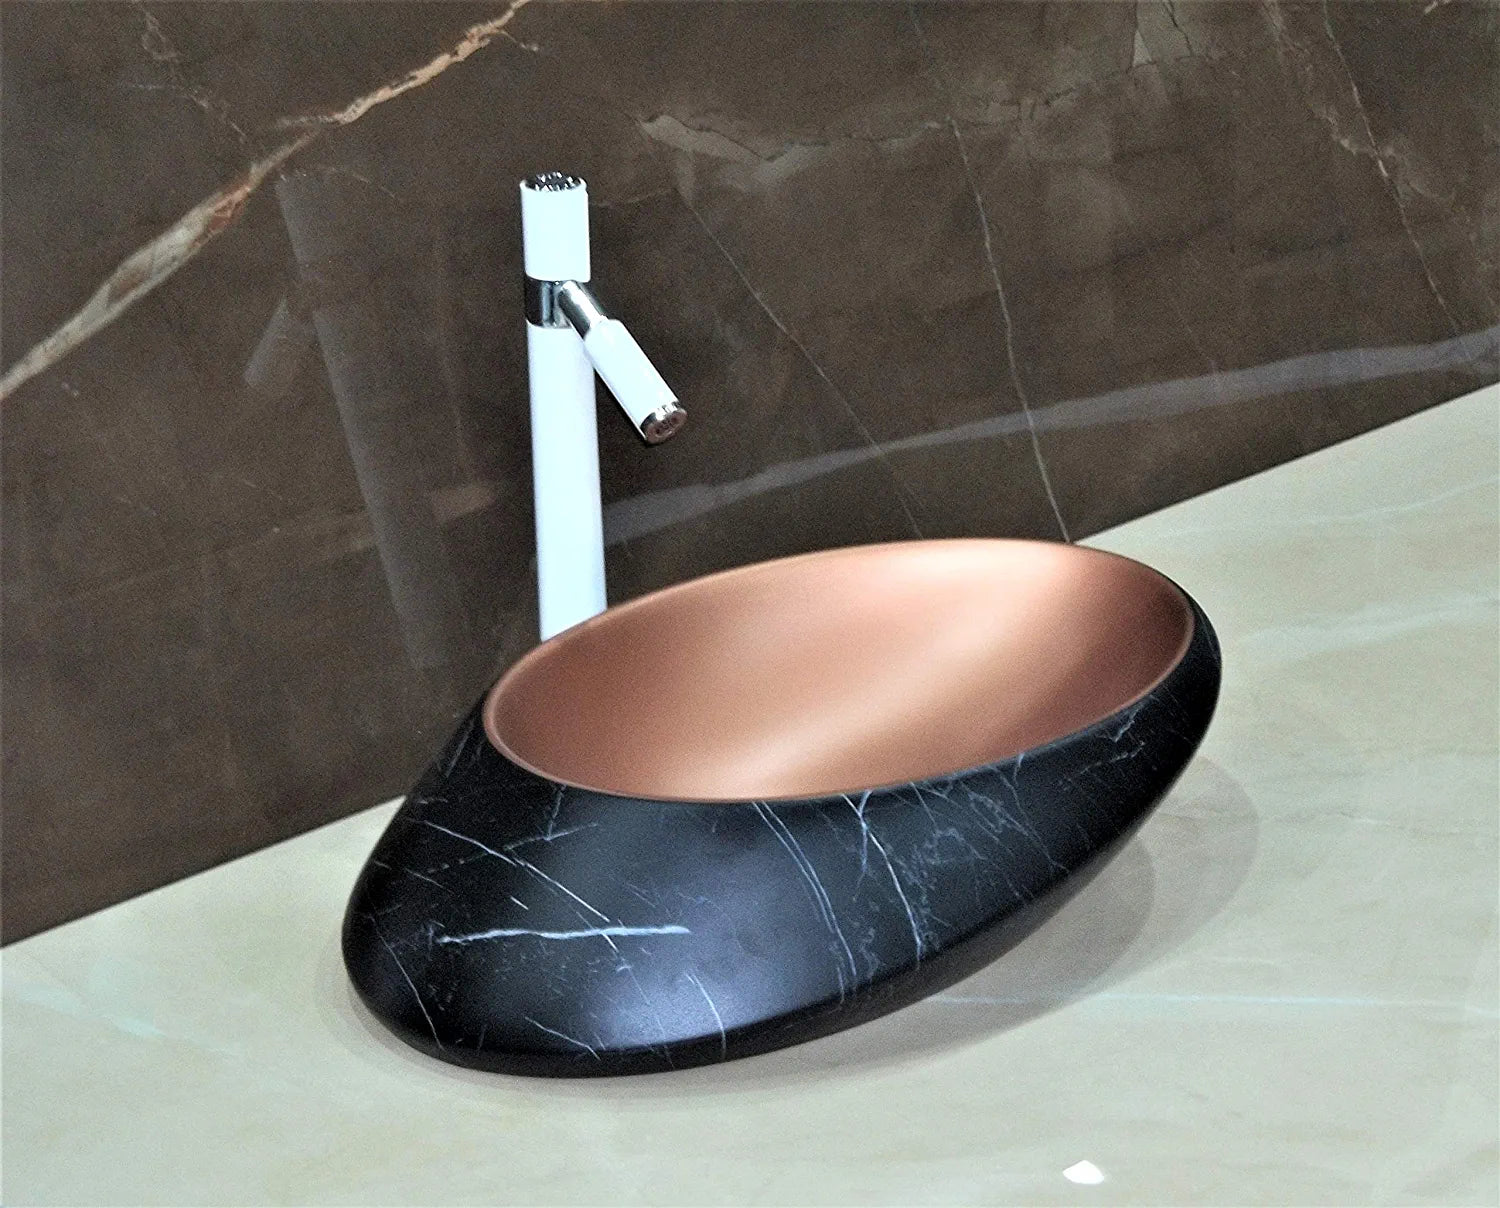 InArt Table Top Wash Basin Design 52 x 38 CM Black Matt